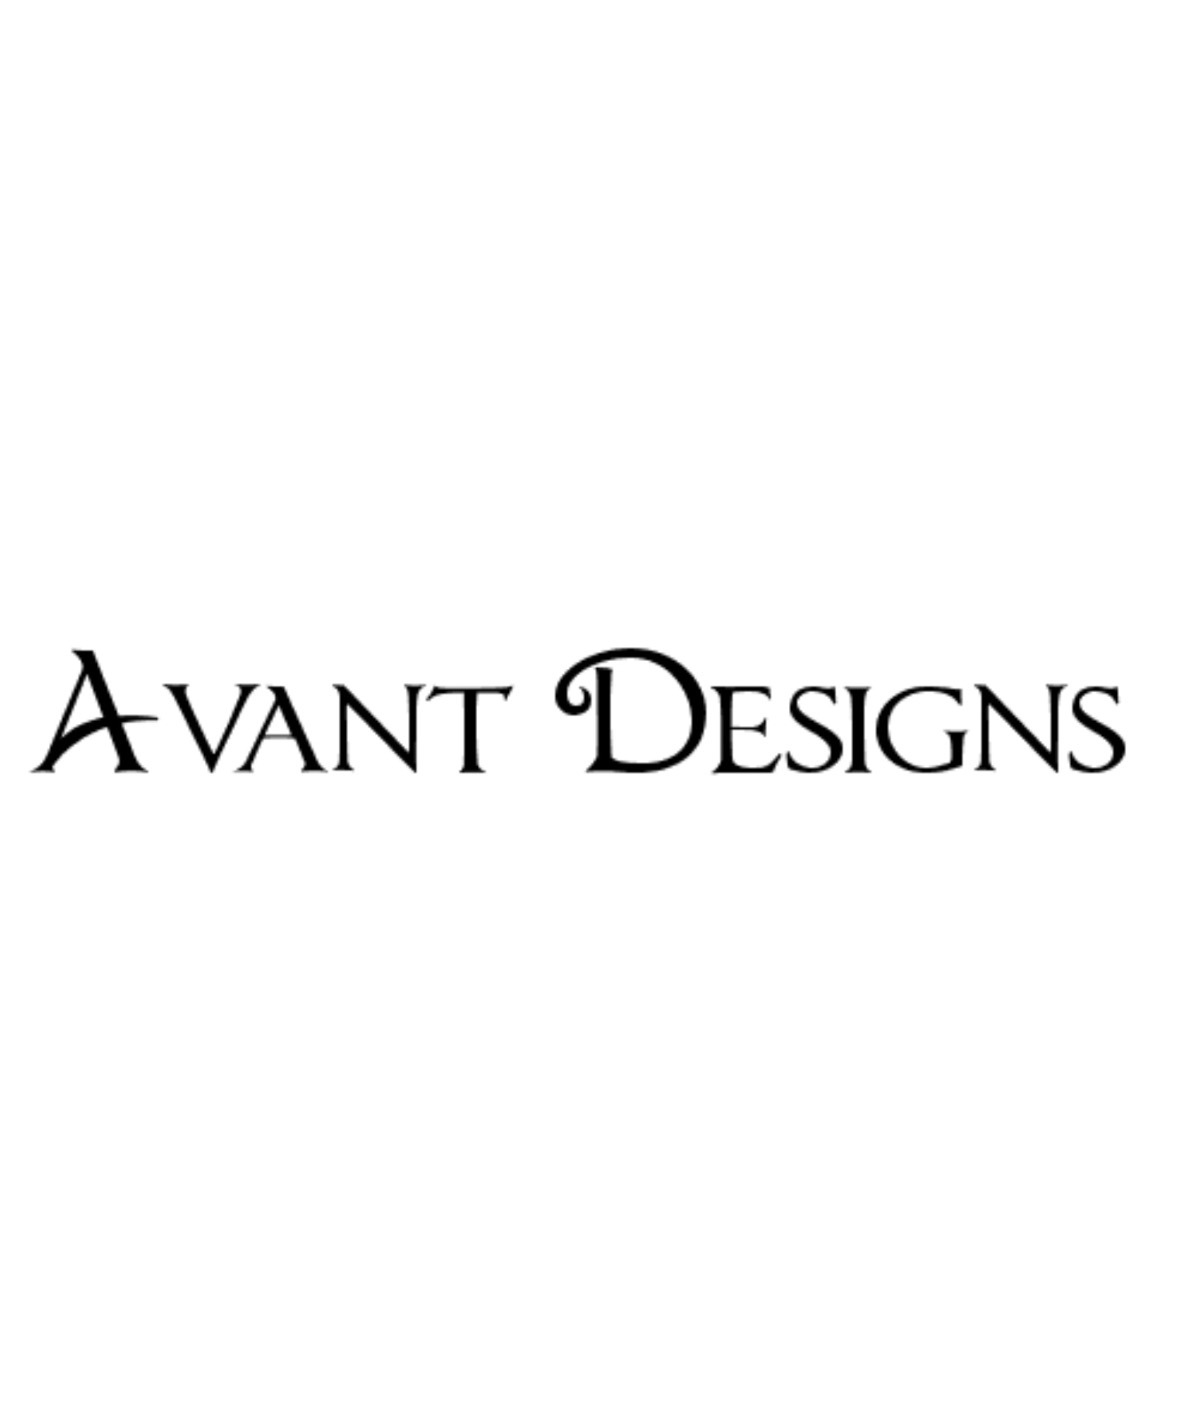 Avant Designs Logo